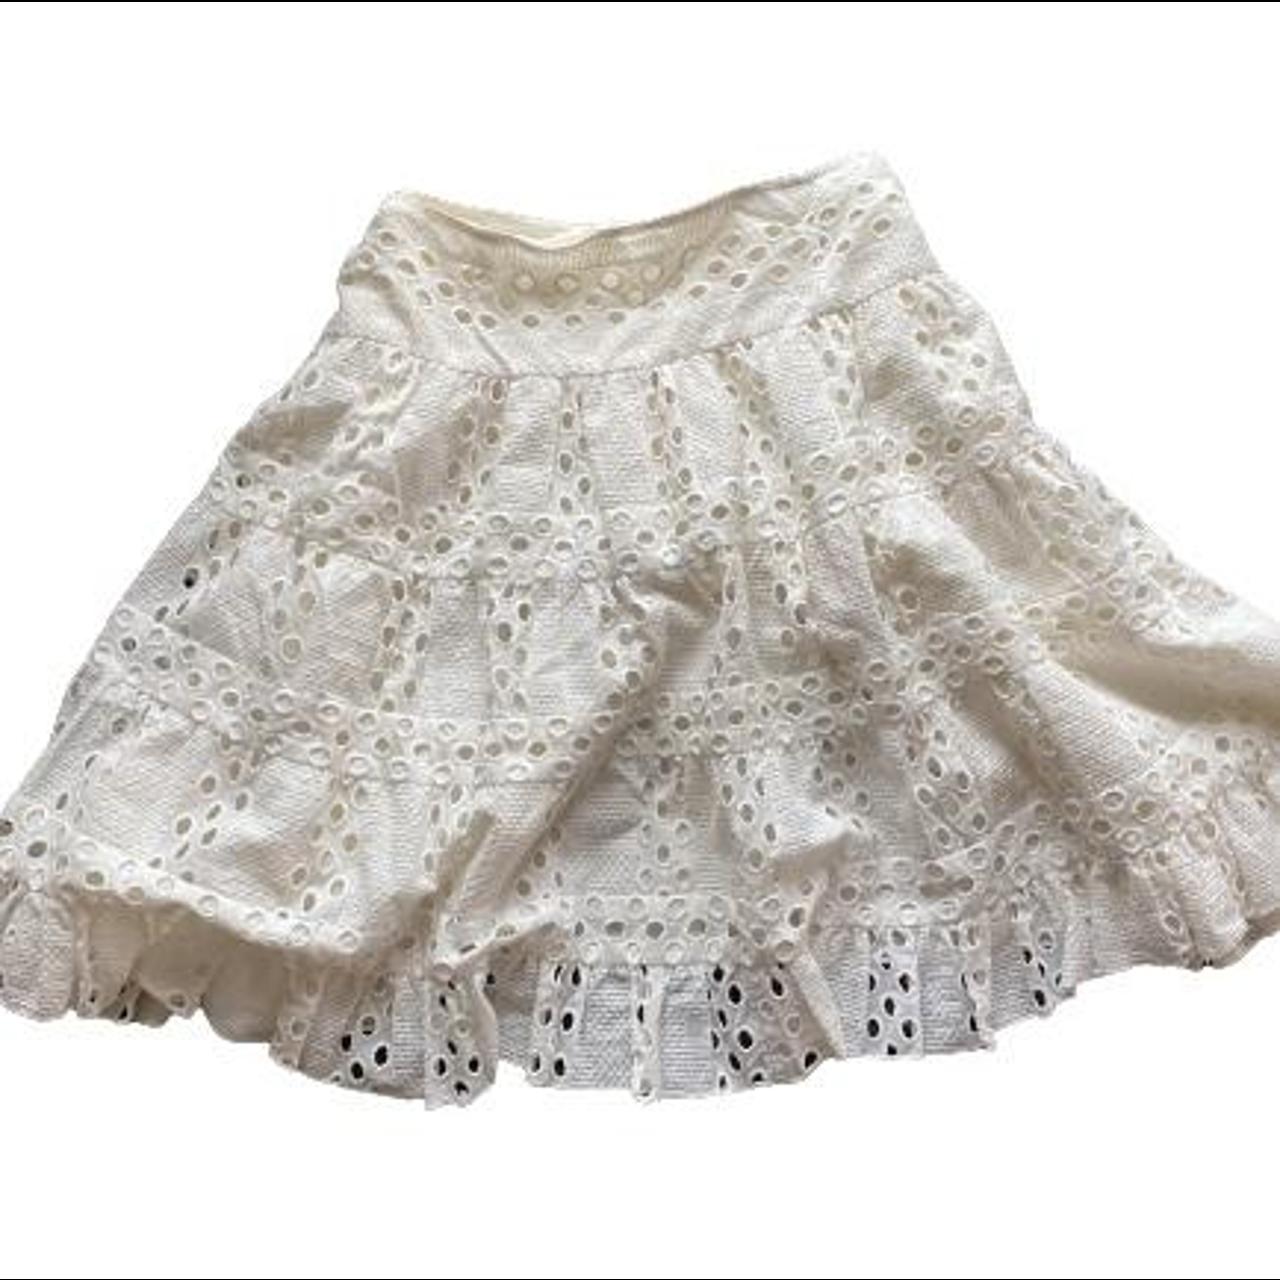 Anna Sui Women's White Skirt